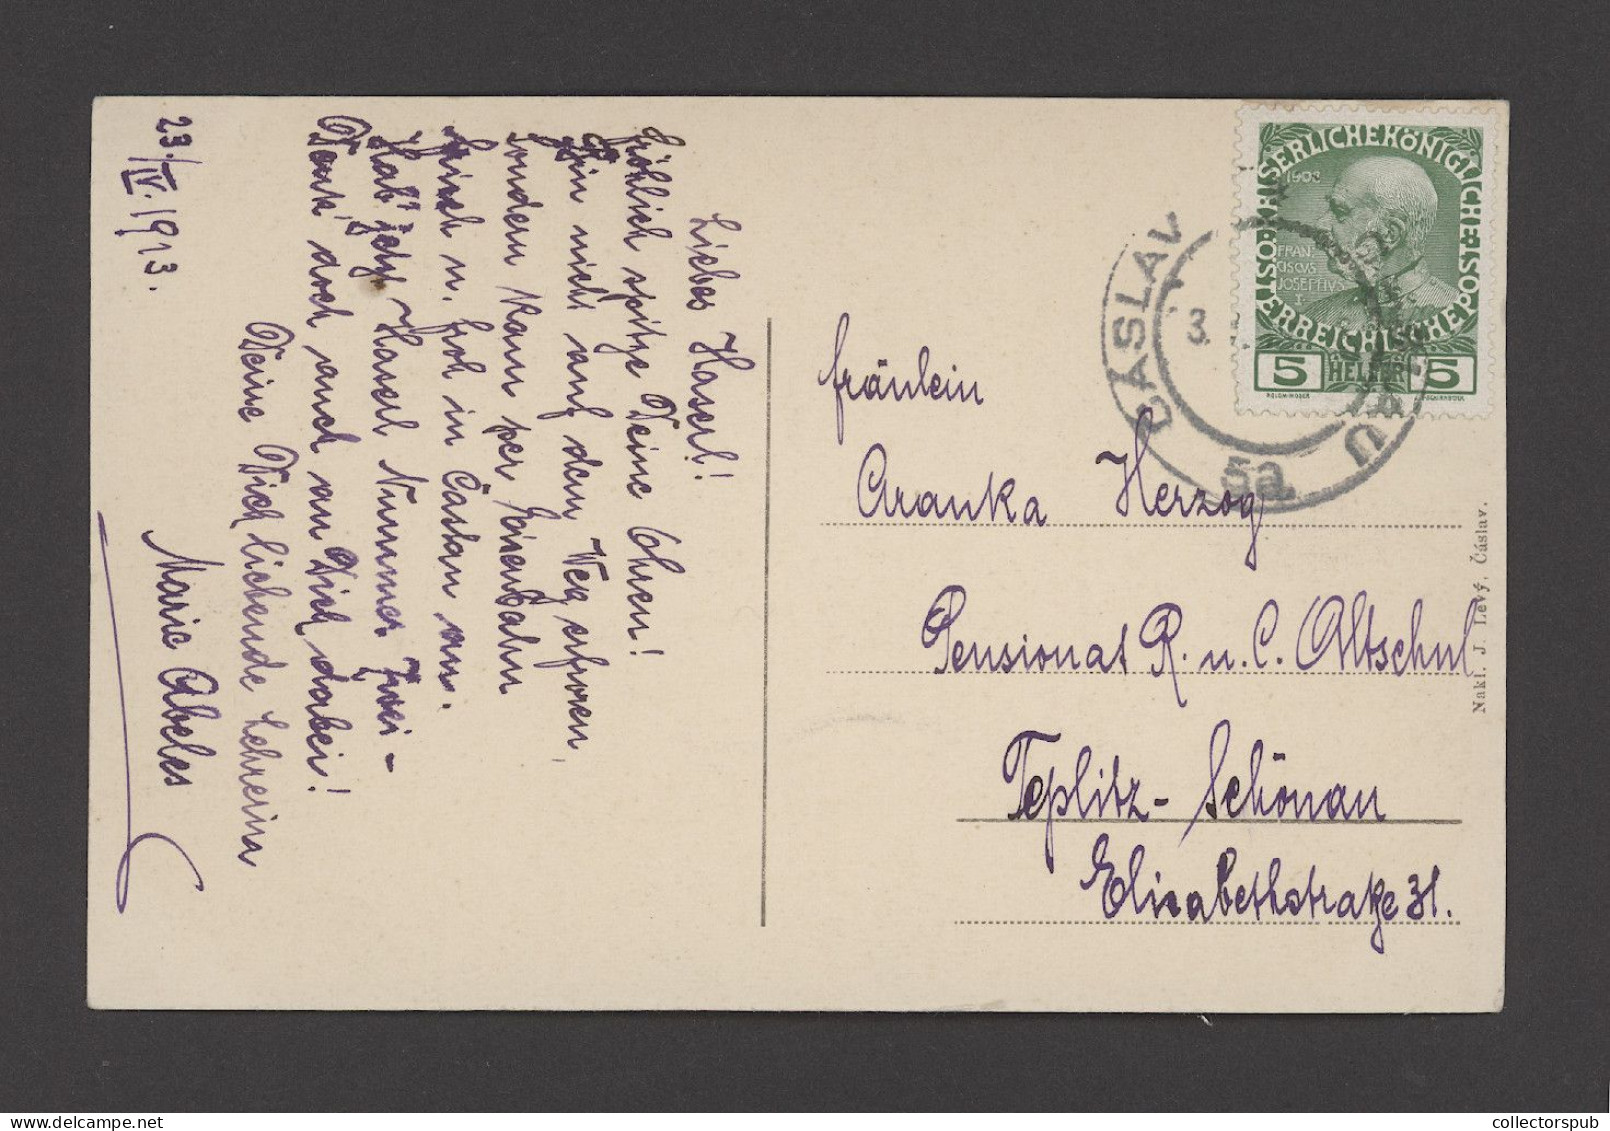 CASLAV Old Postcard  1913 - Tchéquie